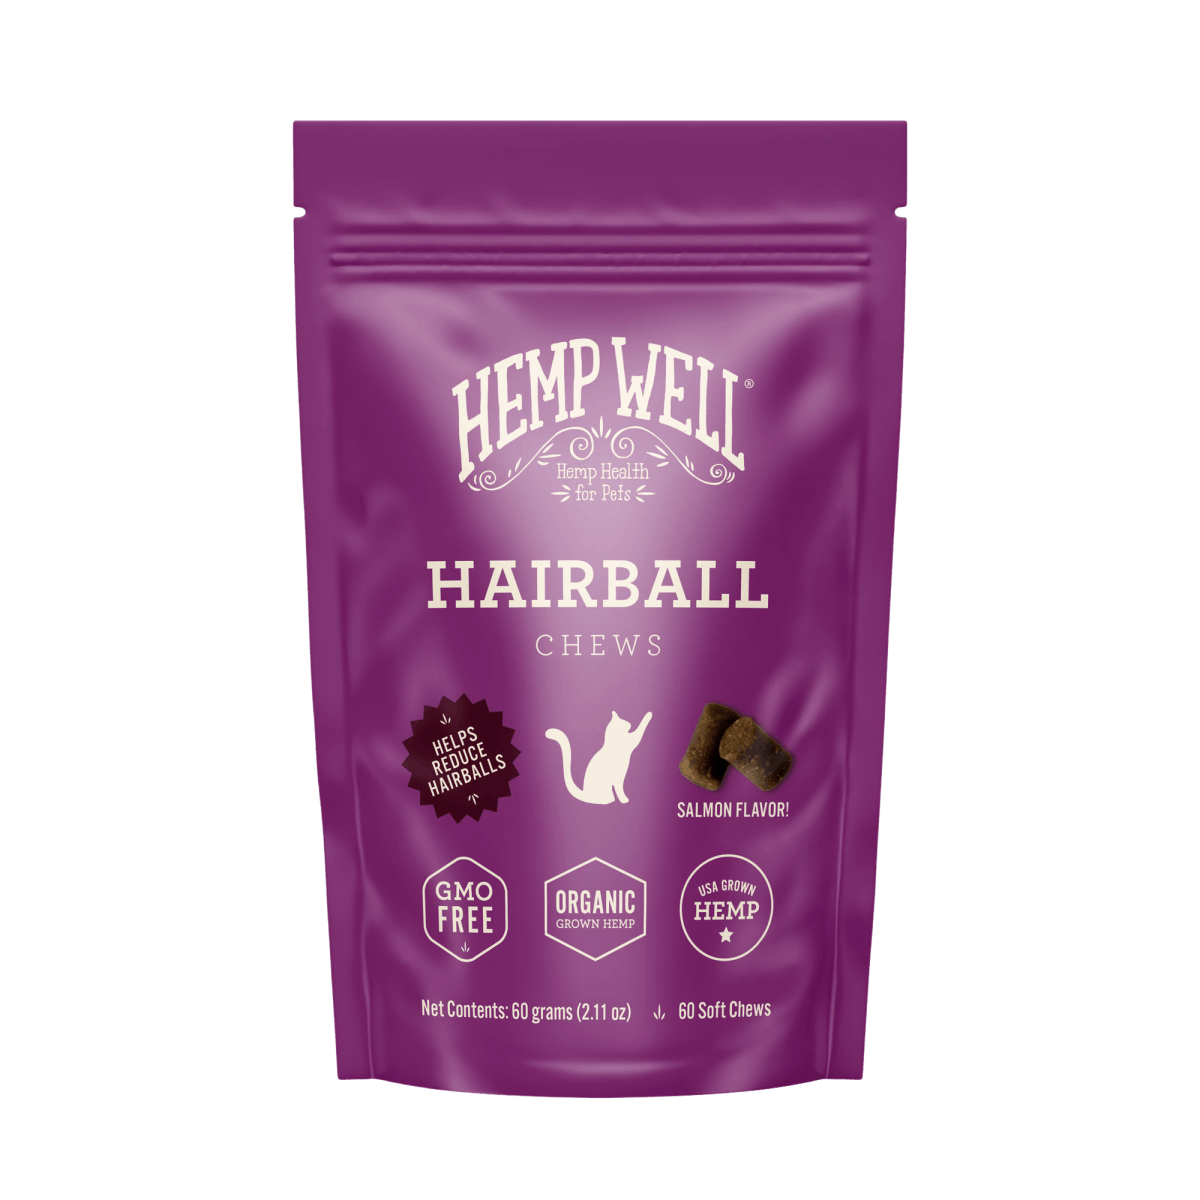 Cat Hairball Soft Chews - Hemp Well